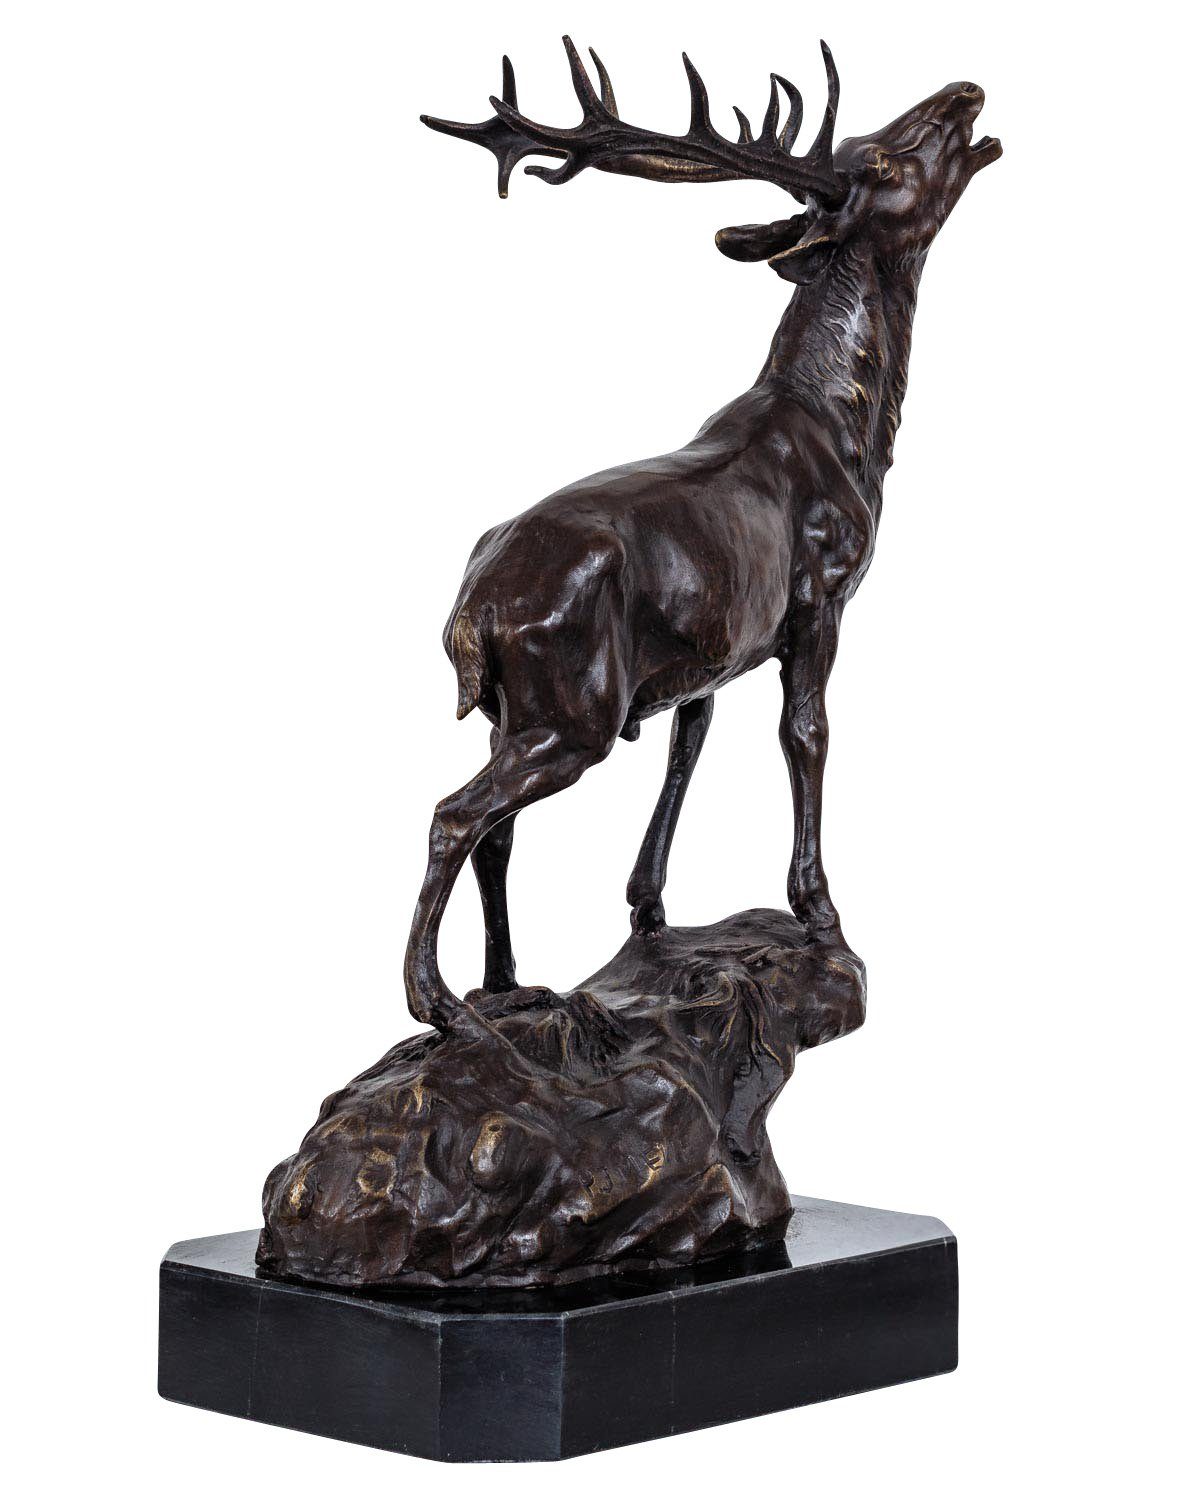 Aubaho Skulptur Bronzeskulptur Hirsch Felsen im Antik-Stil Bronze Figur Statue - 40cm